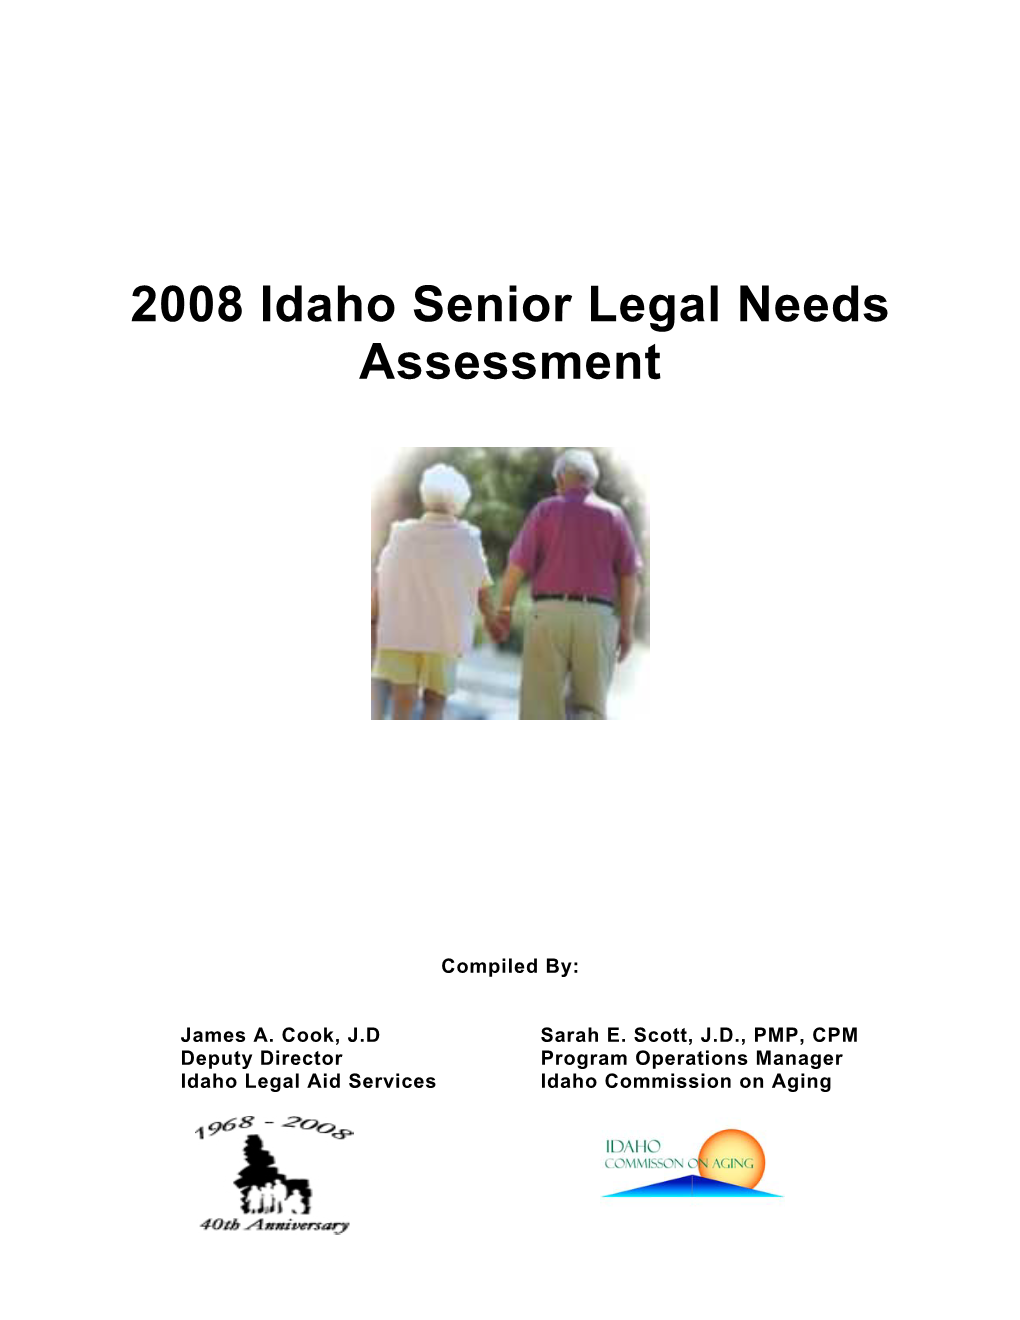 2008 Idaho Senior Legal Needs Report